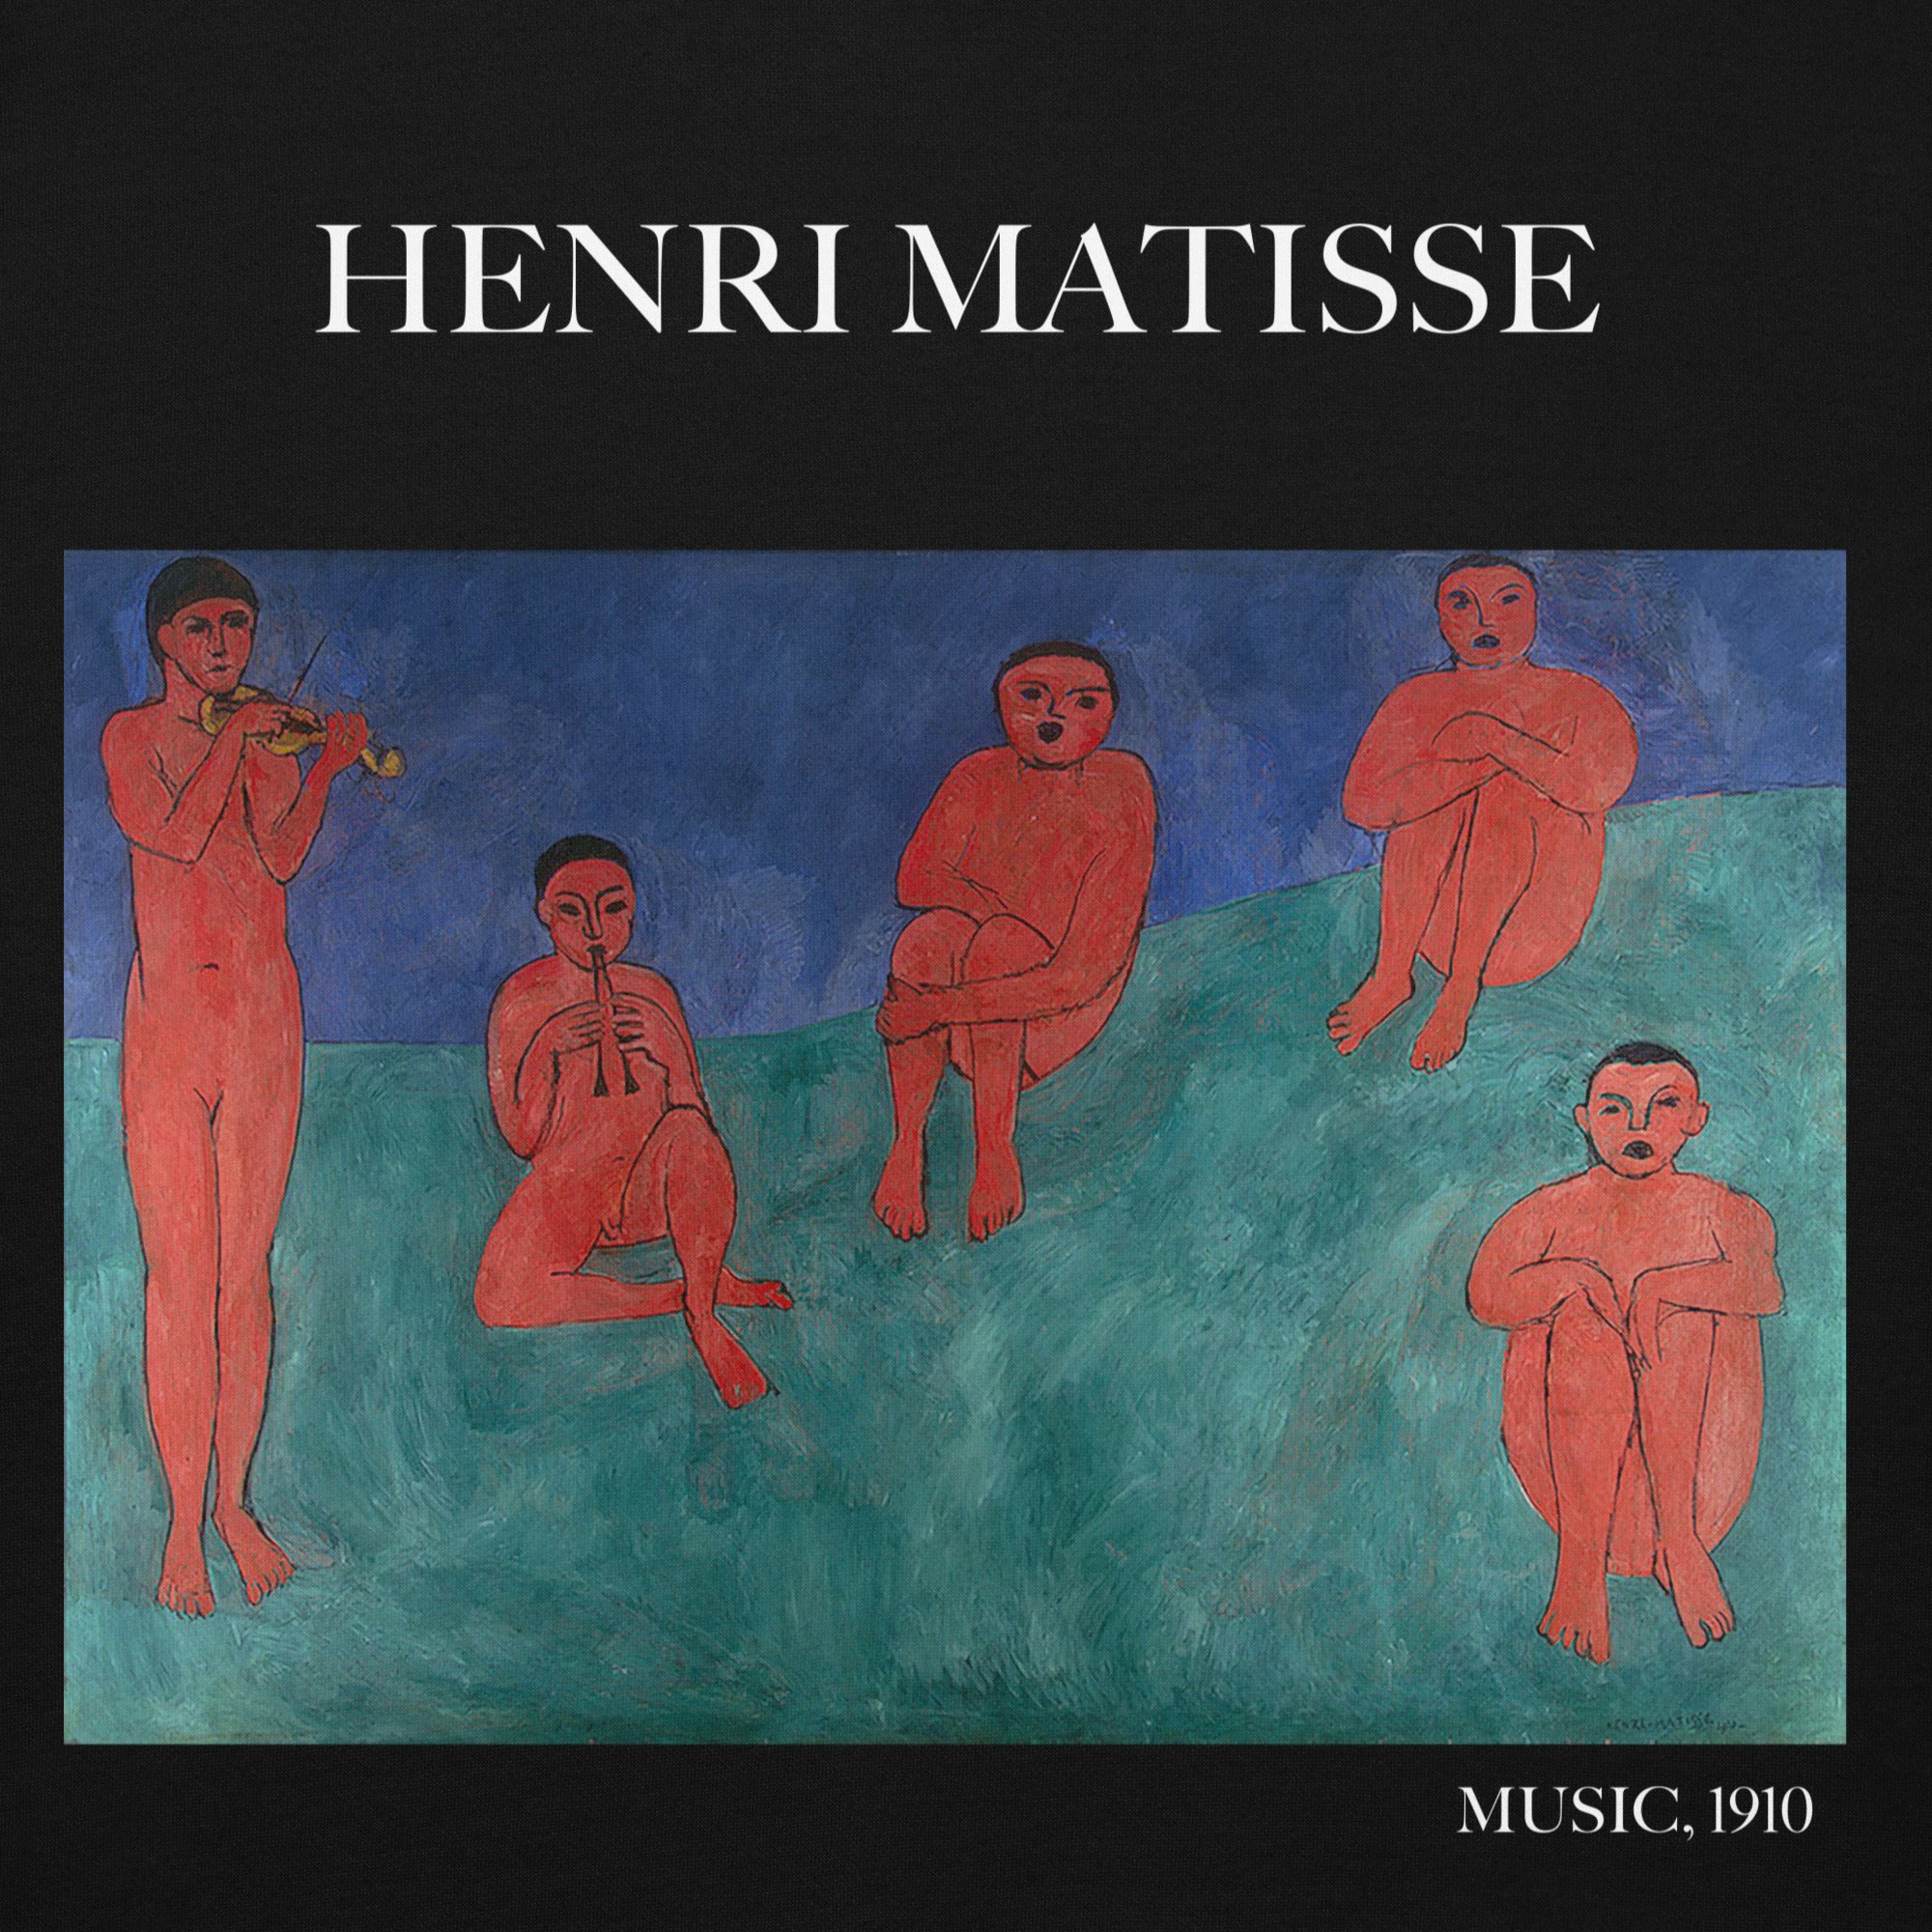 Henri Matisse „Musik“ Berühmtes Gemälde Hoodie | Unisex Premium Kunst Hoodie